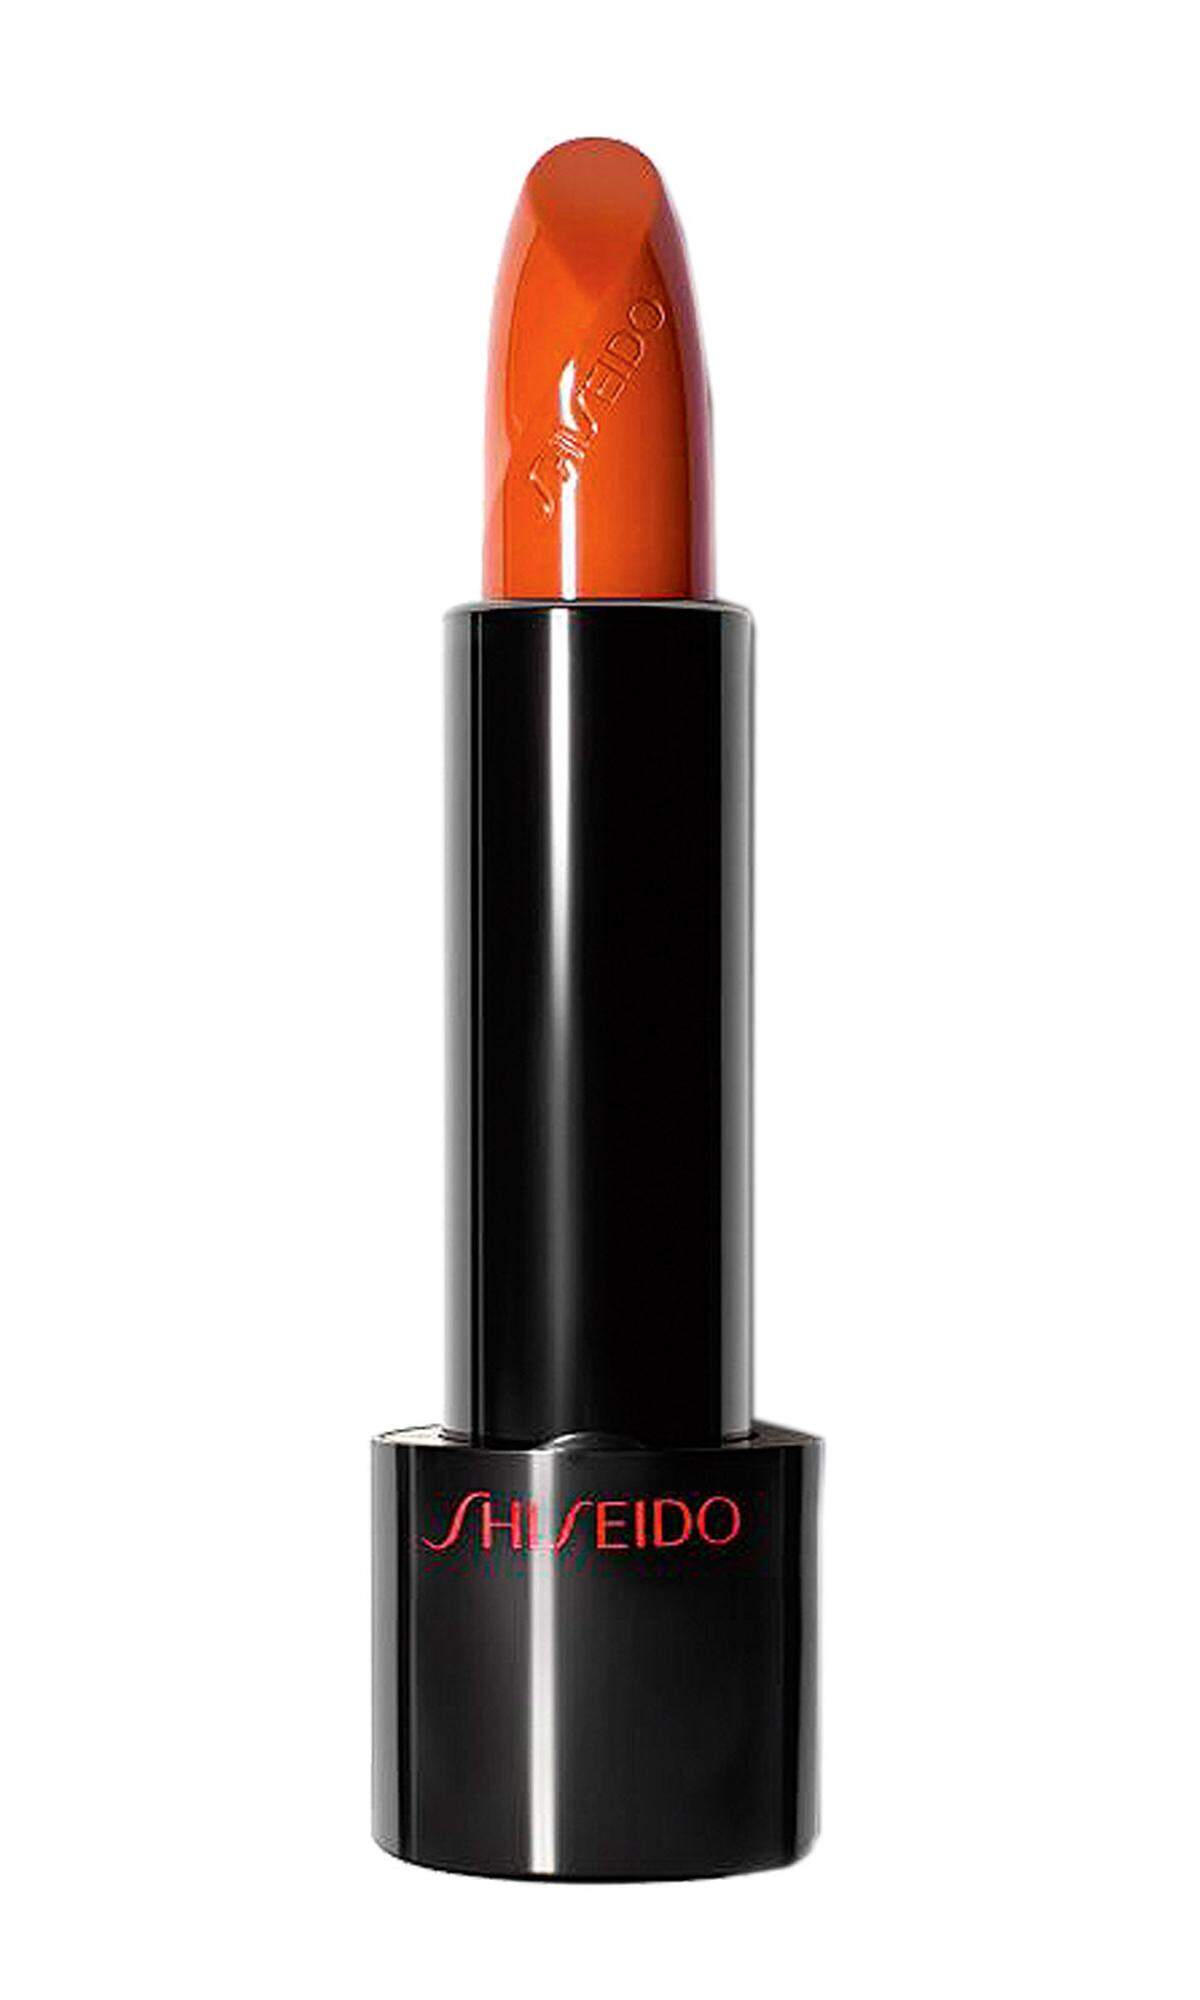 Lippenstift „Rouge Rouge“ in „Fire Topaz“ von Shiseido, 29,95 Euro.